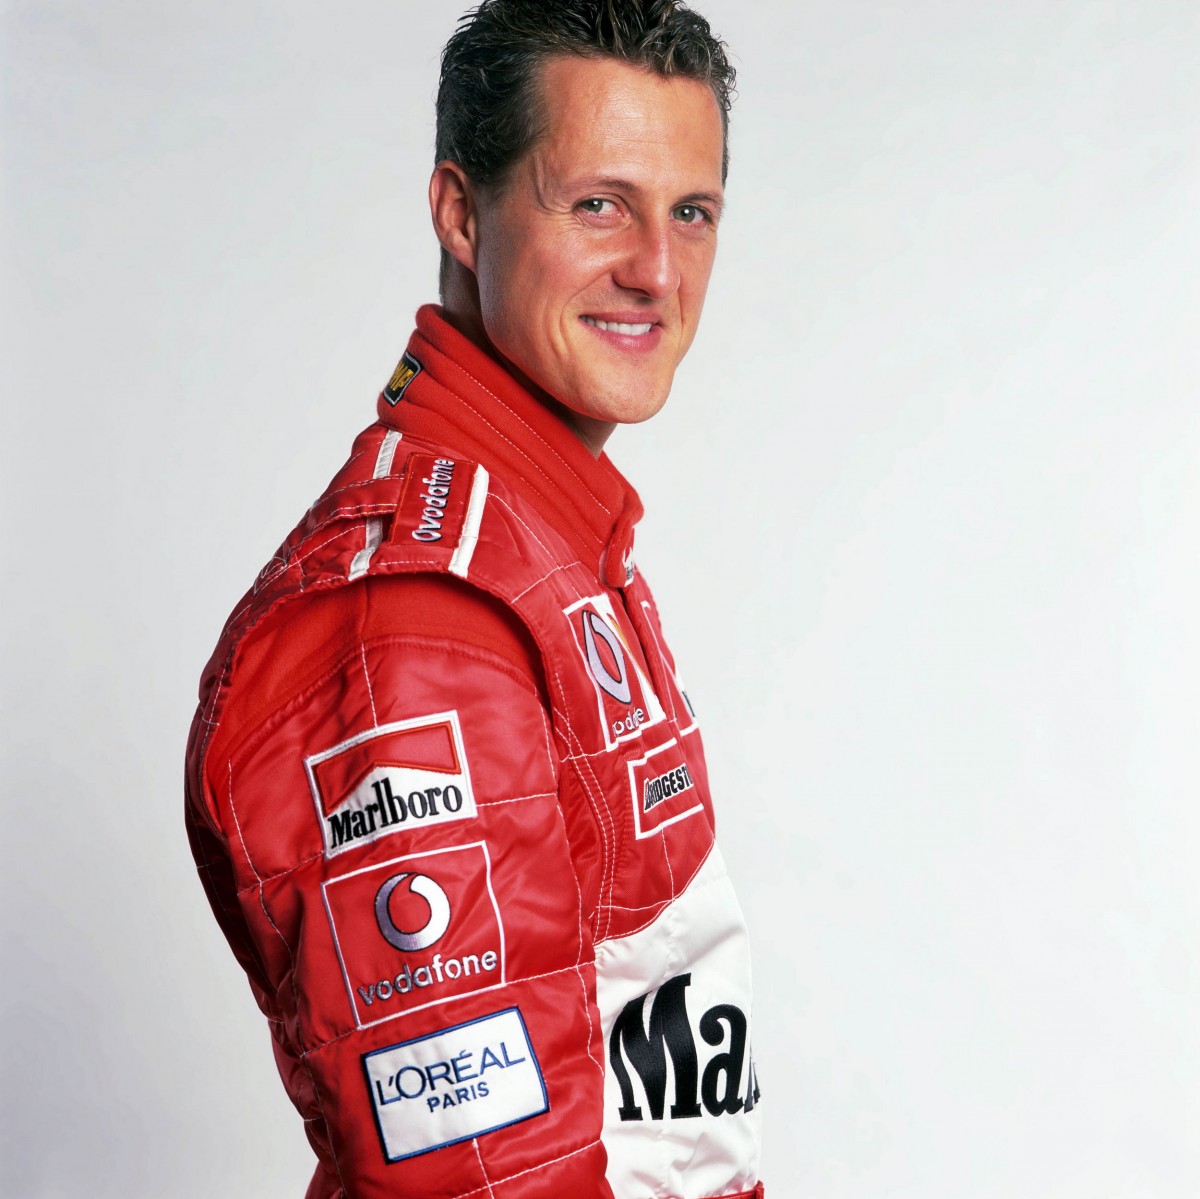 Michael Schumacher photo 8 of 23 pics, wallpaper - photo #245621 ...